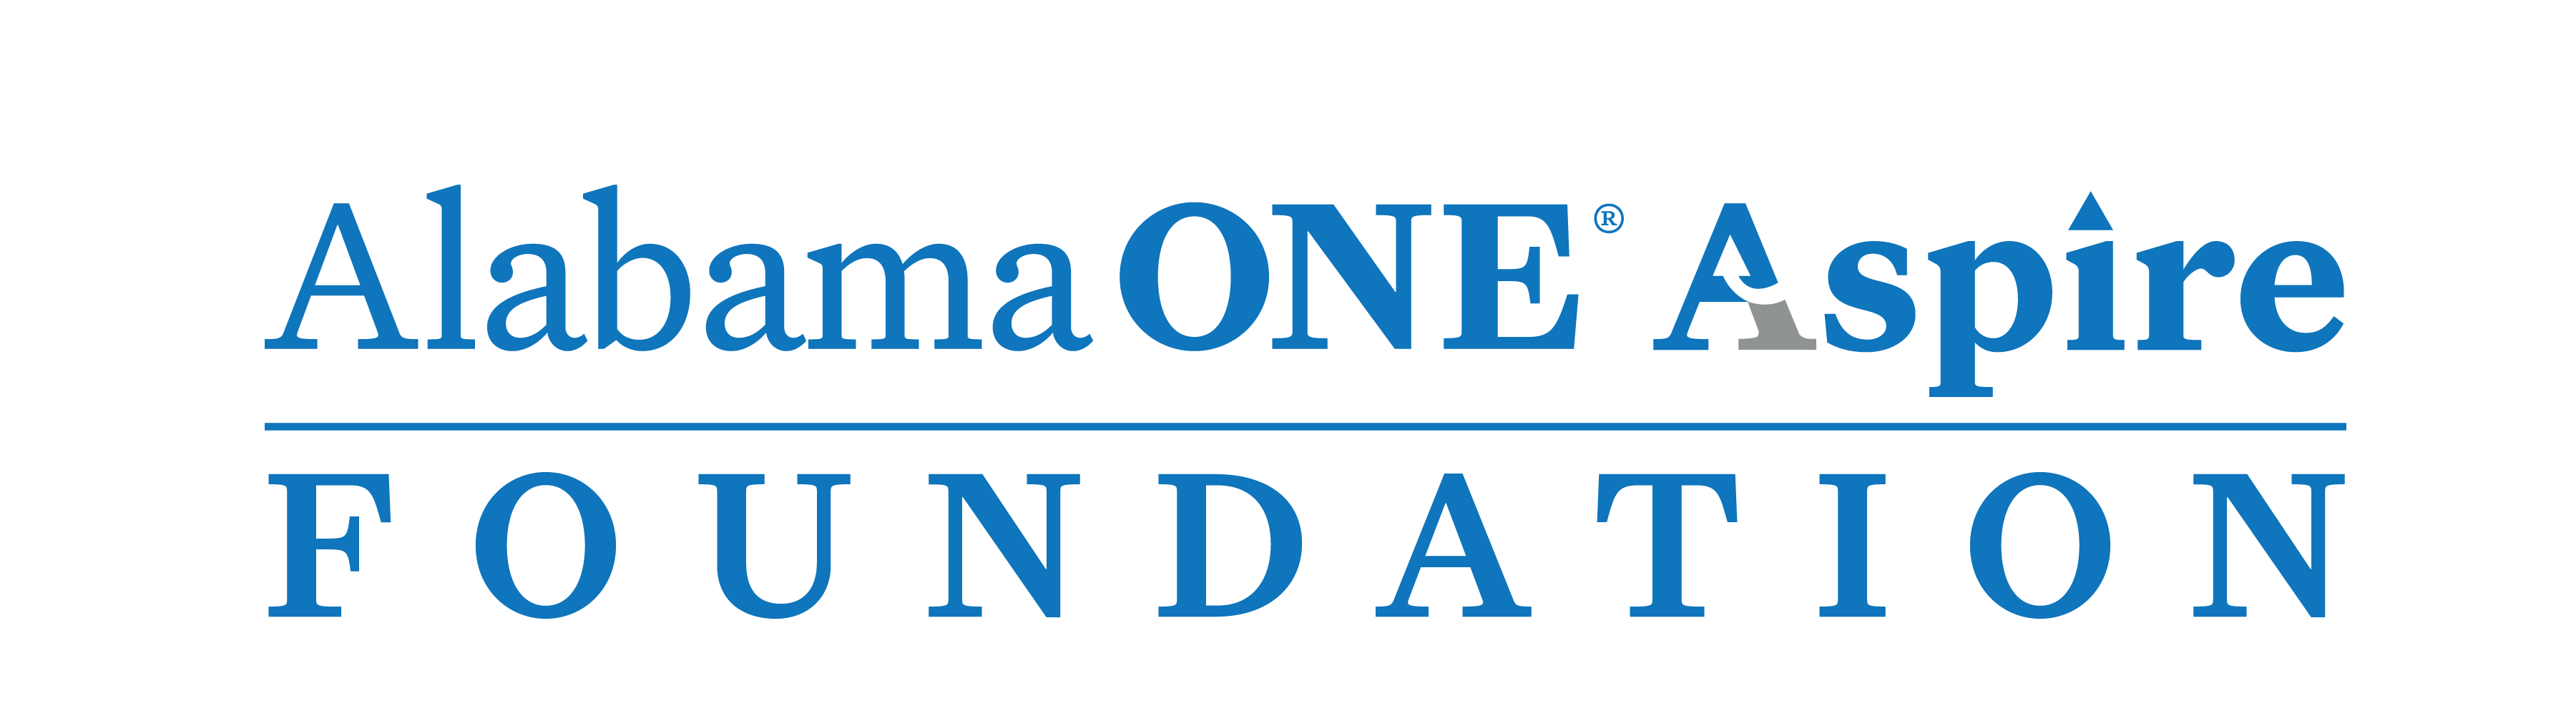 Alabama One Aspire Foundation Logo